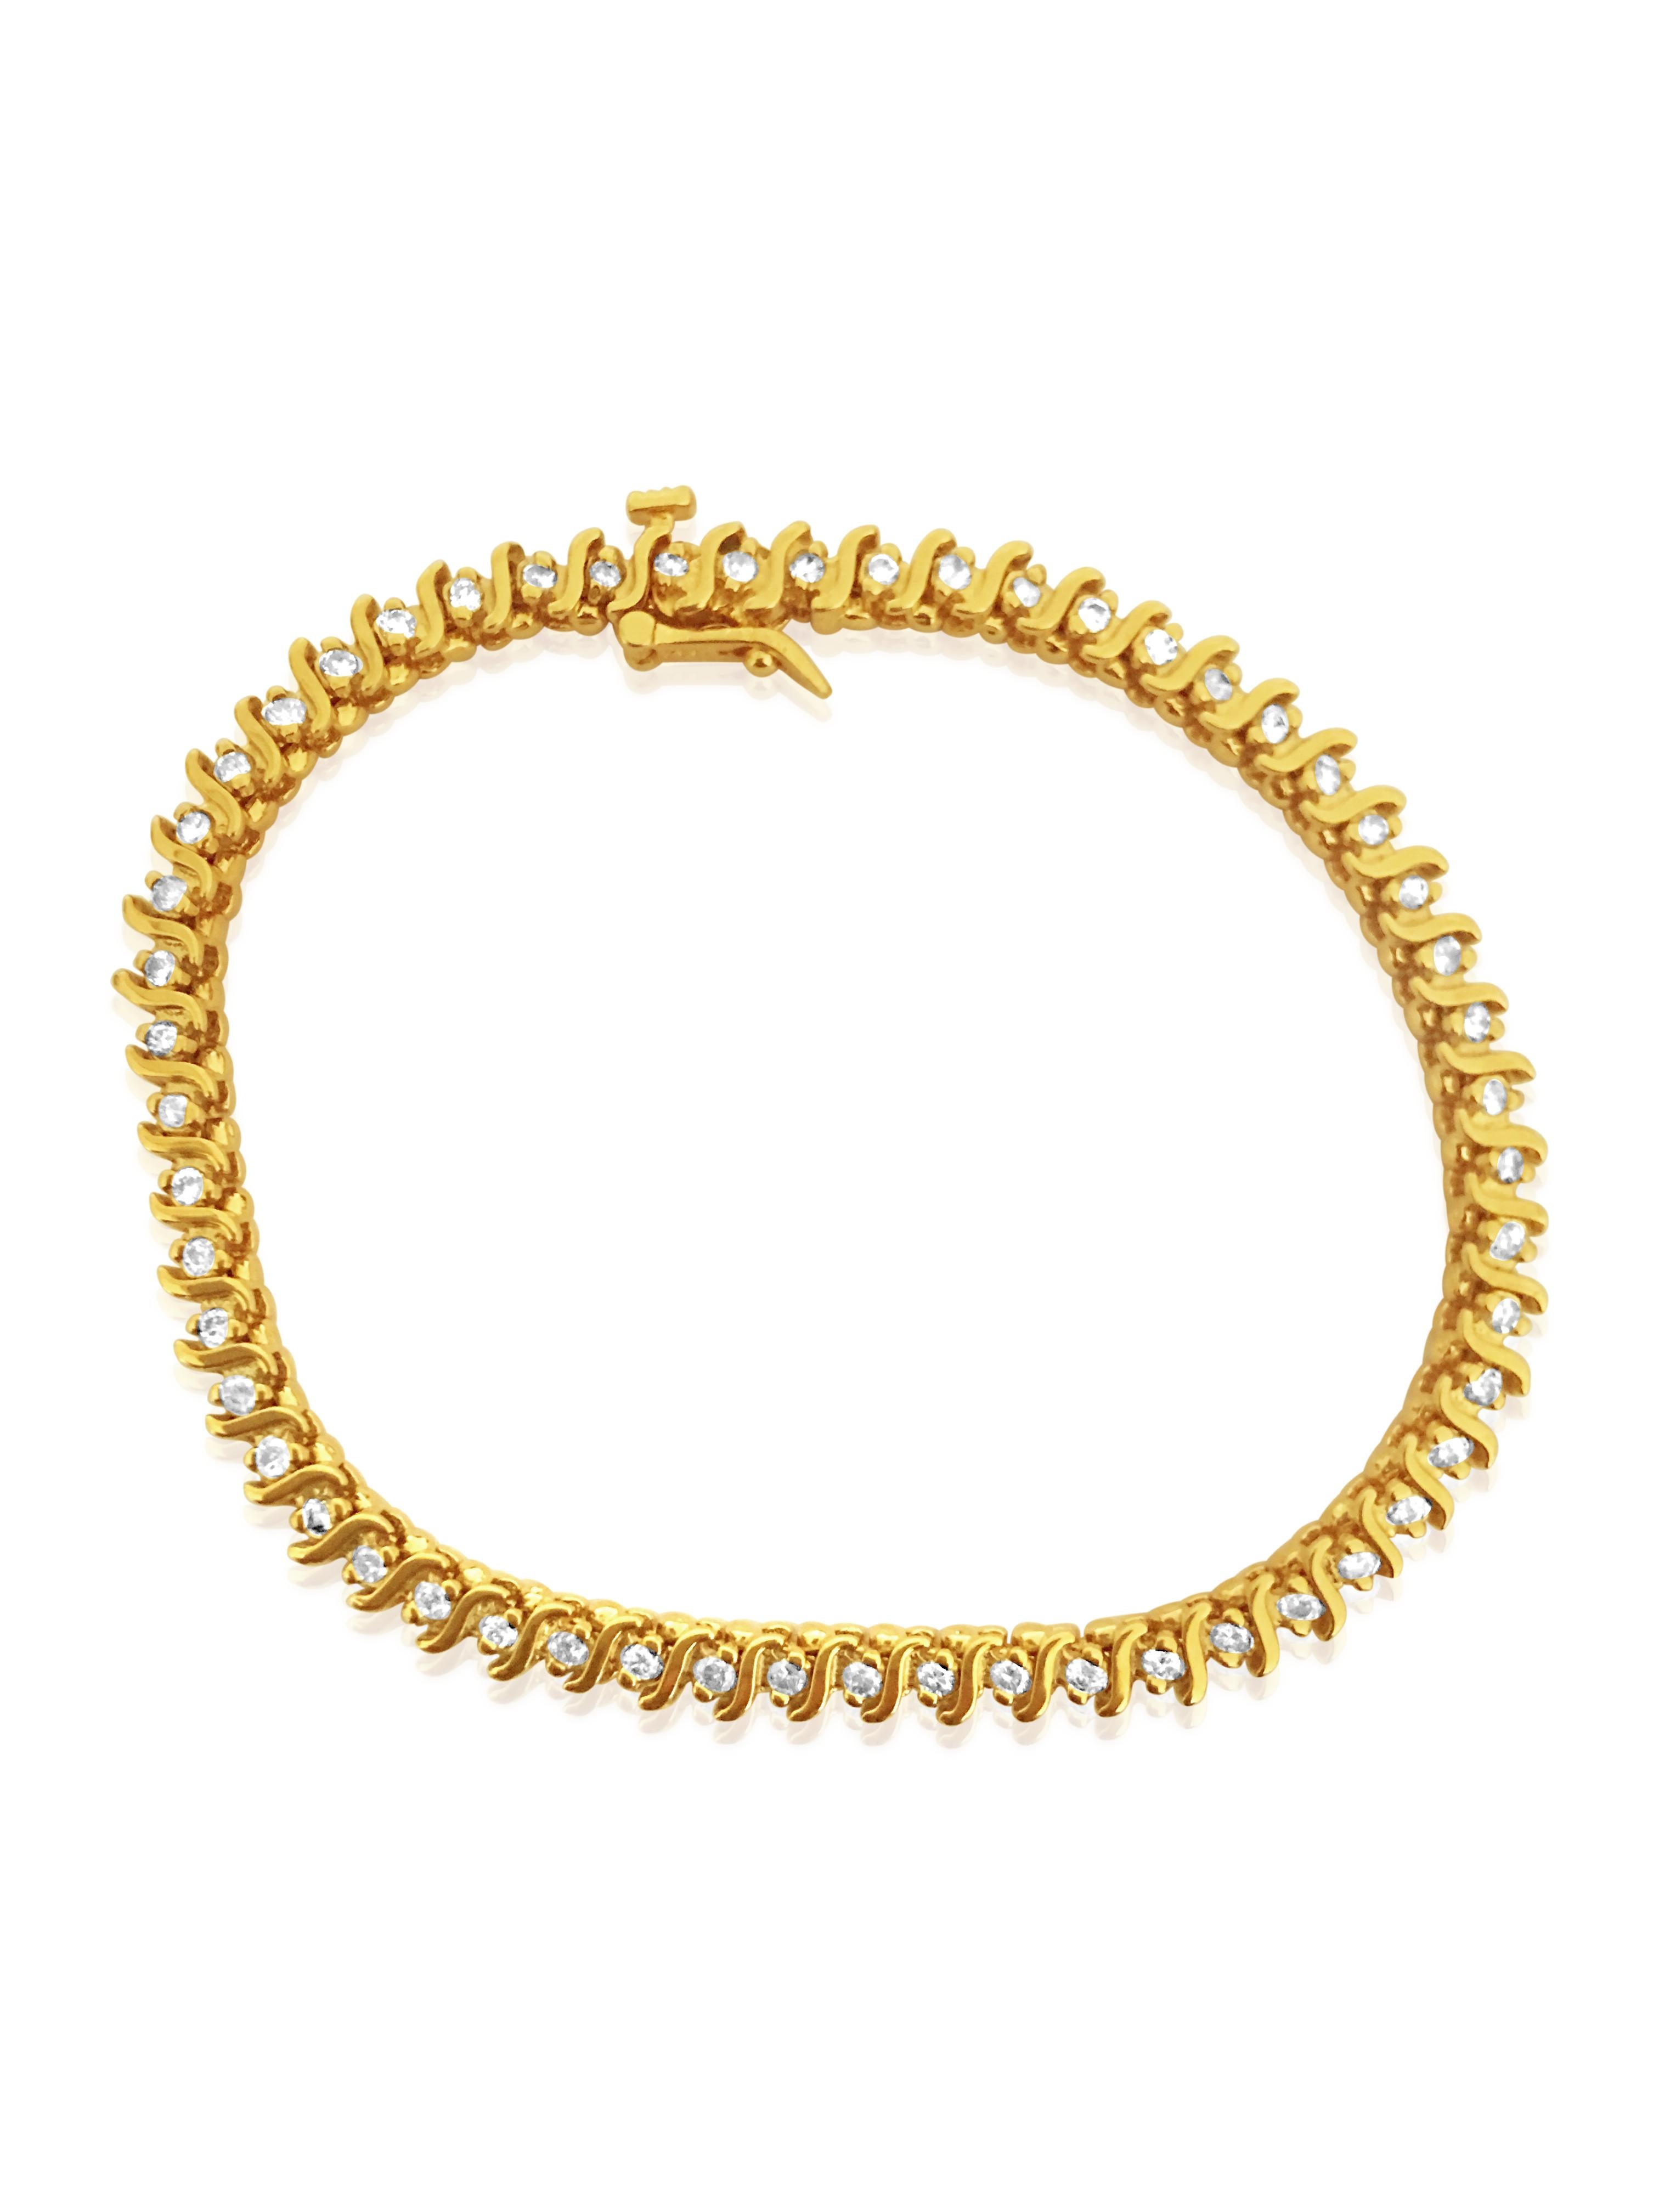 Modern 1.00 Carat Diamond Tennis Bracelet in 14 Karat Yellow Gold For Sale